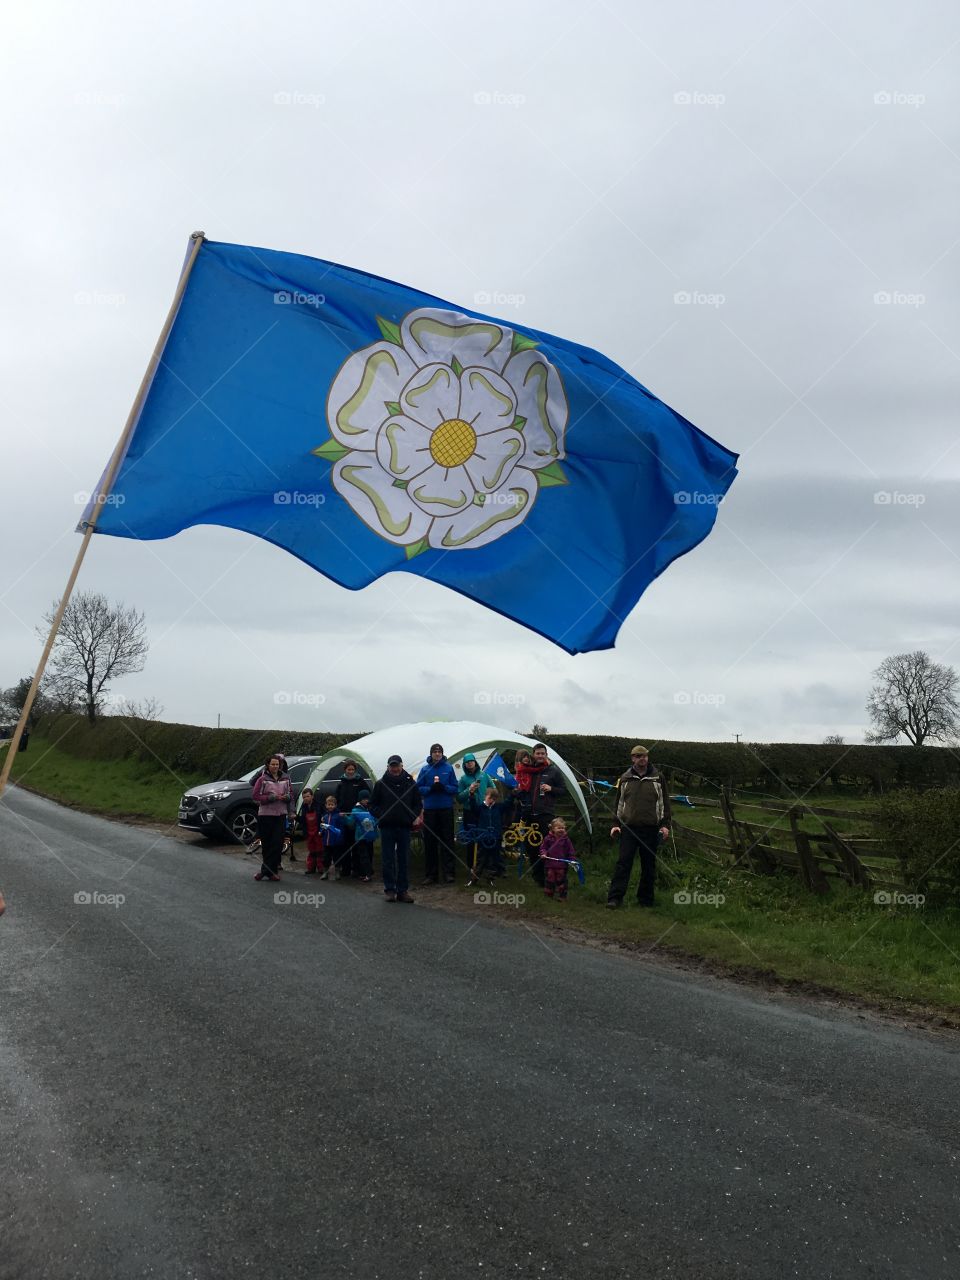 Tour de Yorkshire supporters in the rain! 